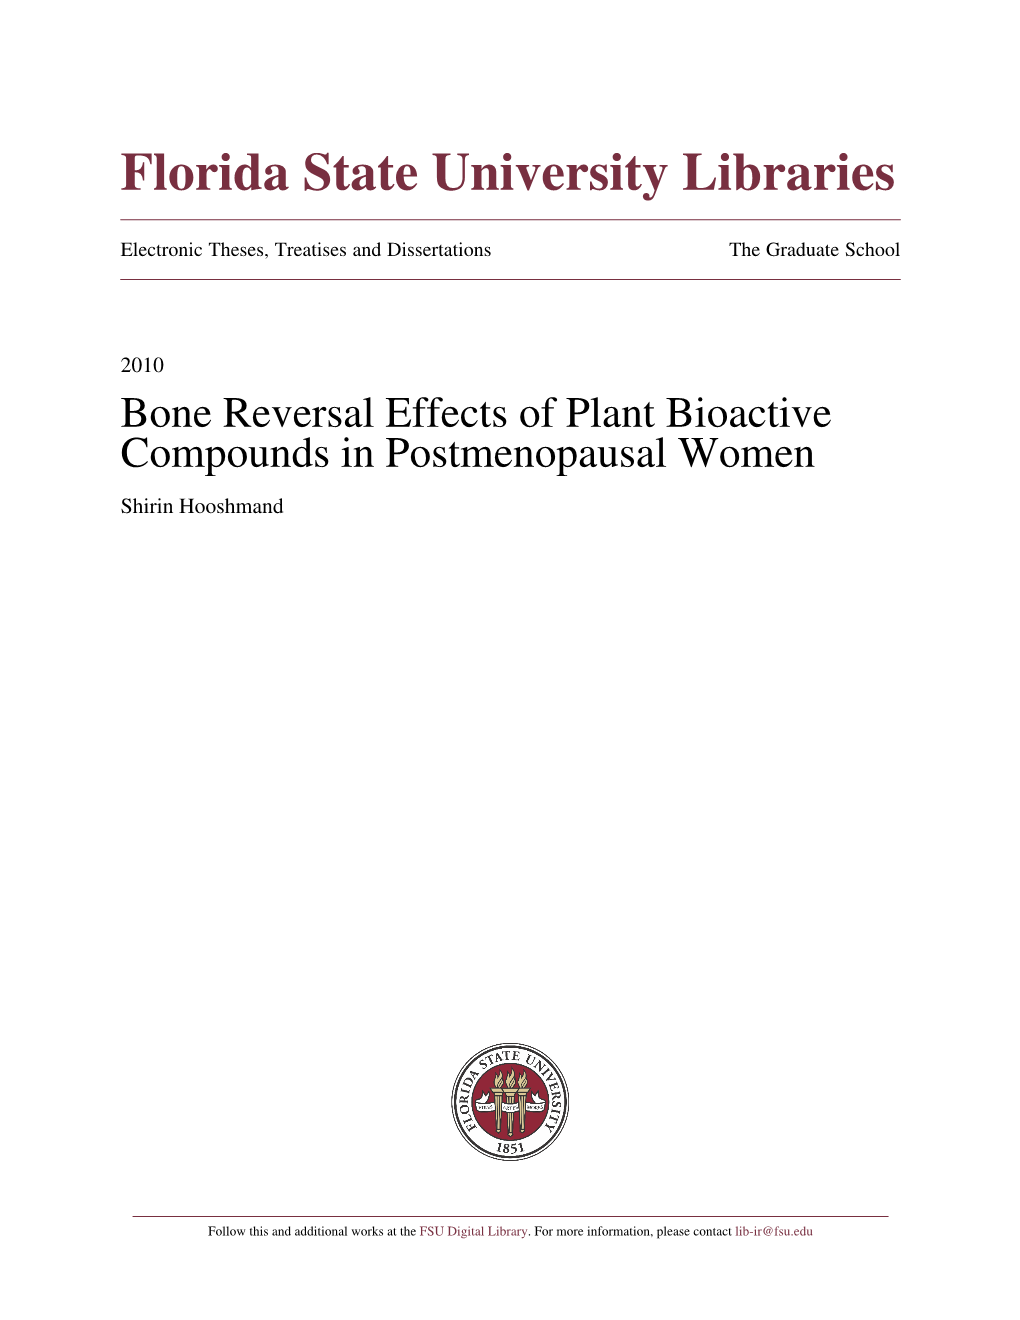 Bone Reversal Effects of Plant Bioactive Compounds in Postmenopausal Women Shirin Hooshmand